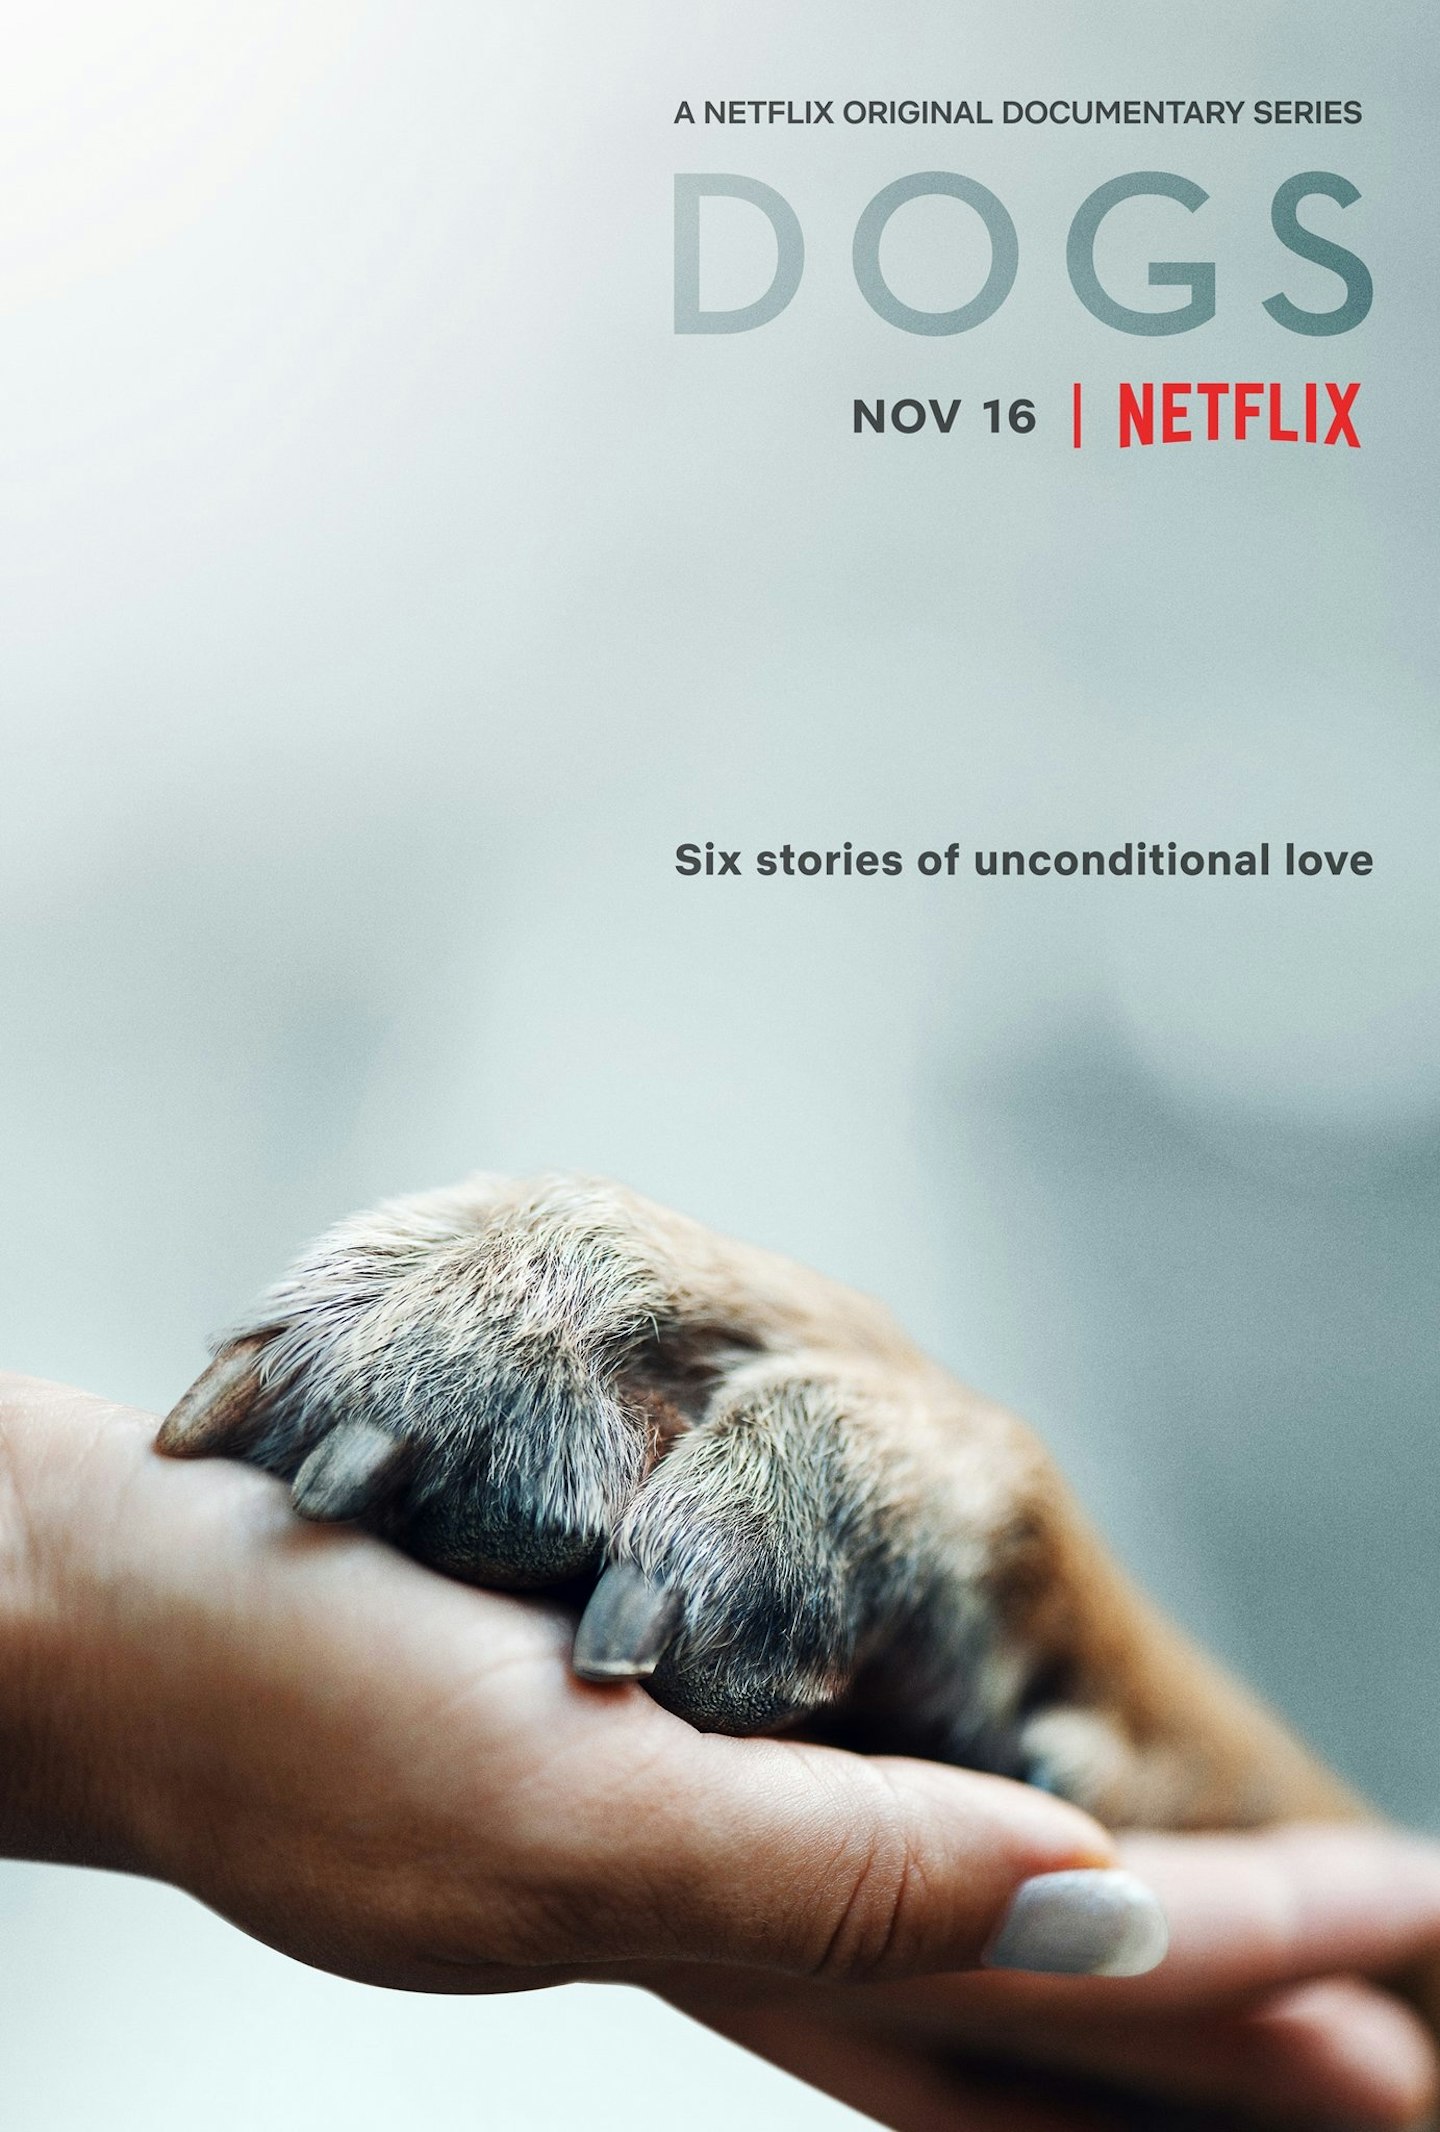 Netflix Dogs documentary